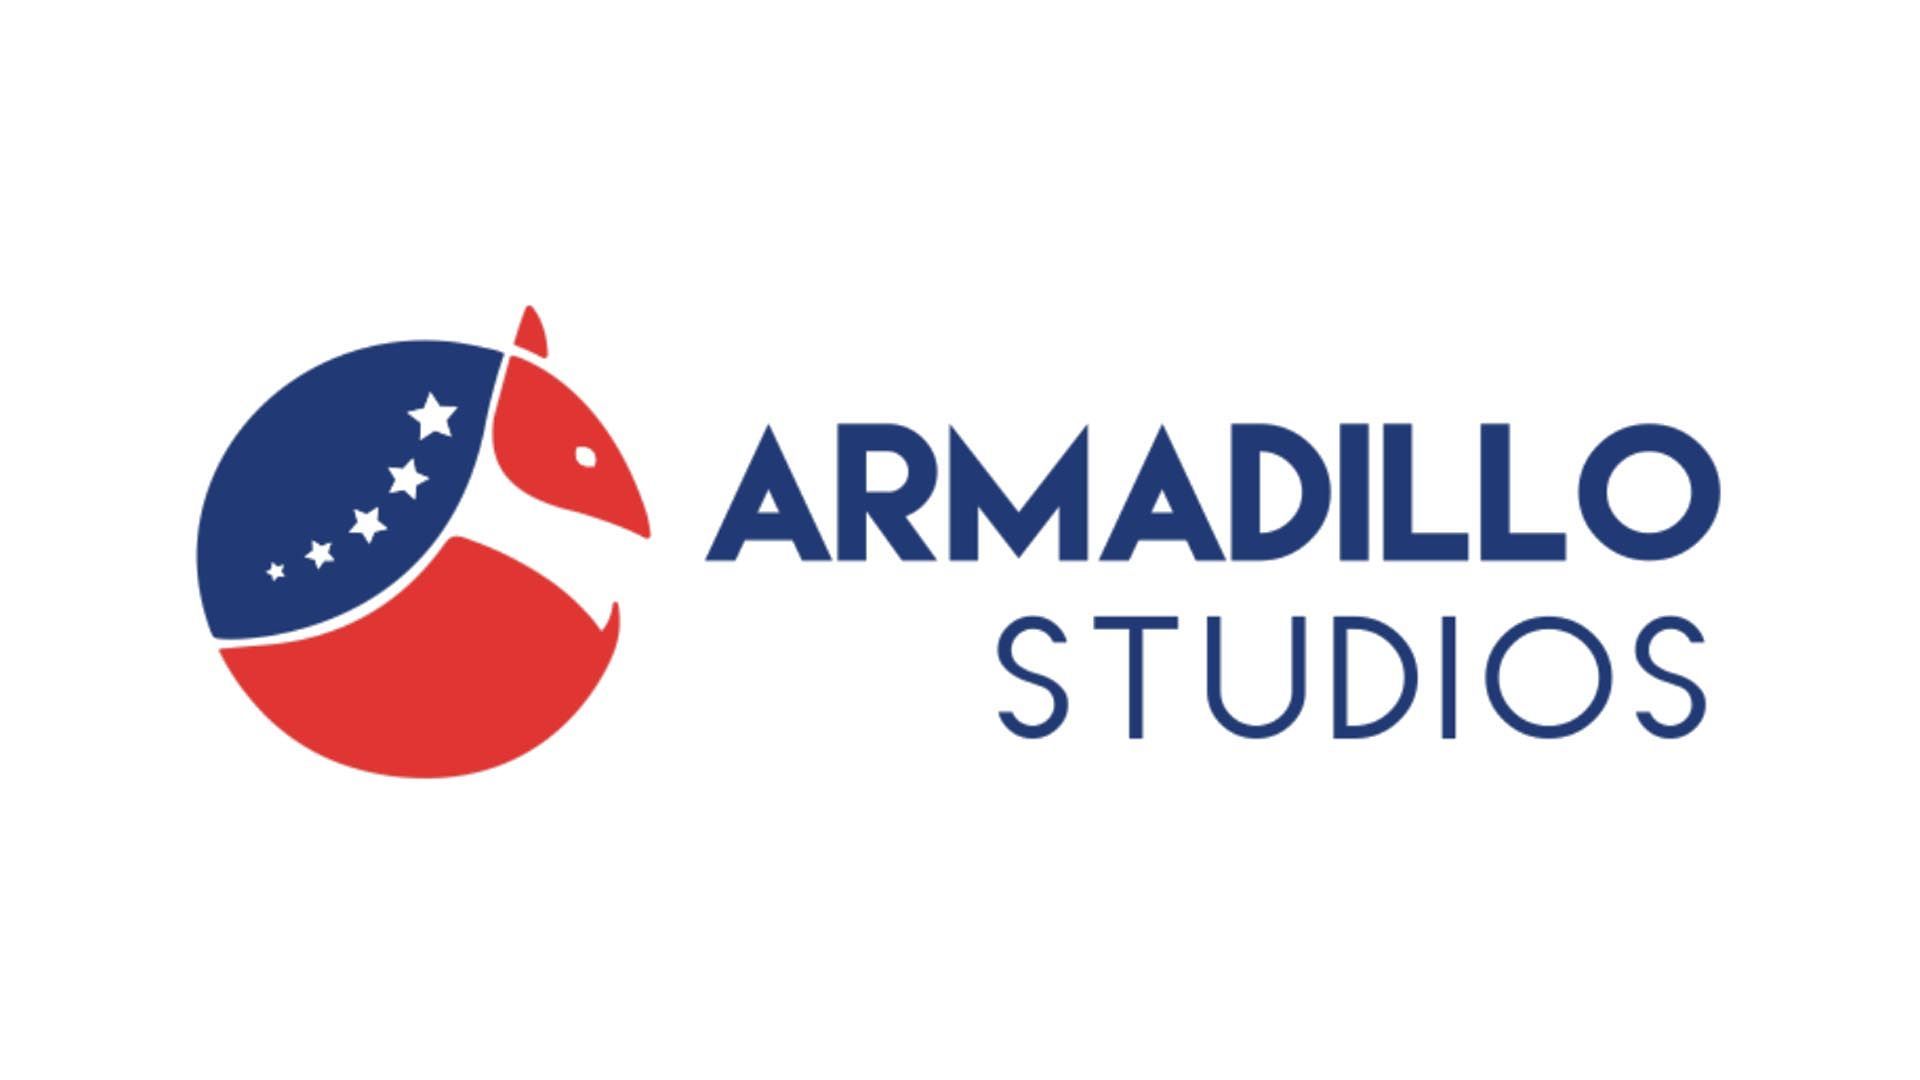 Armadillo Studios Producer Free Slot Online Games